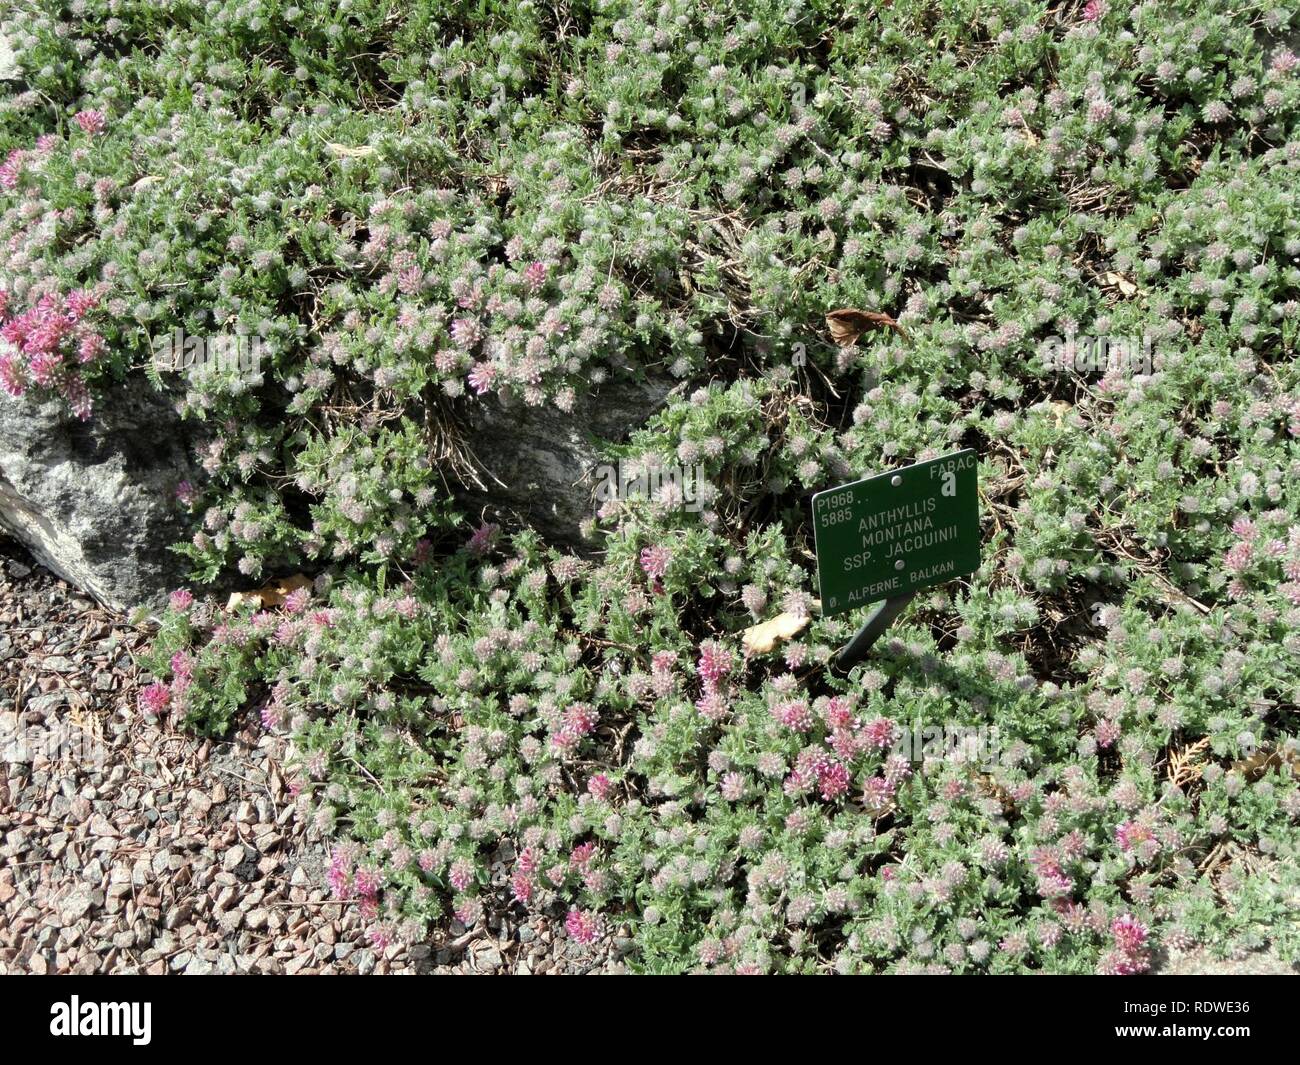 Anthyllis montana subsp. jacquinii - Copenhagen Botanical Garden - Stock Photo